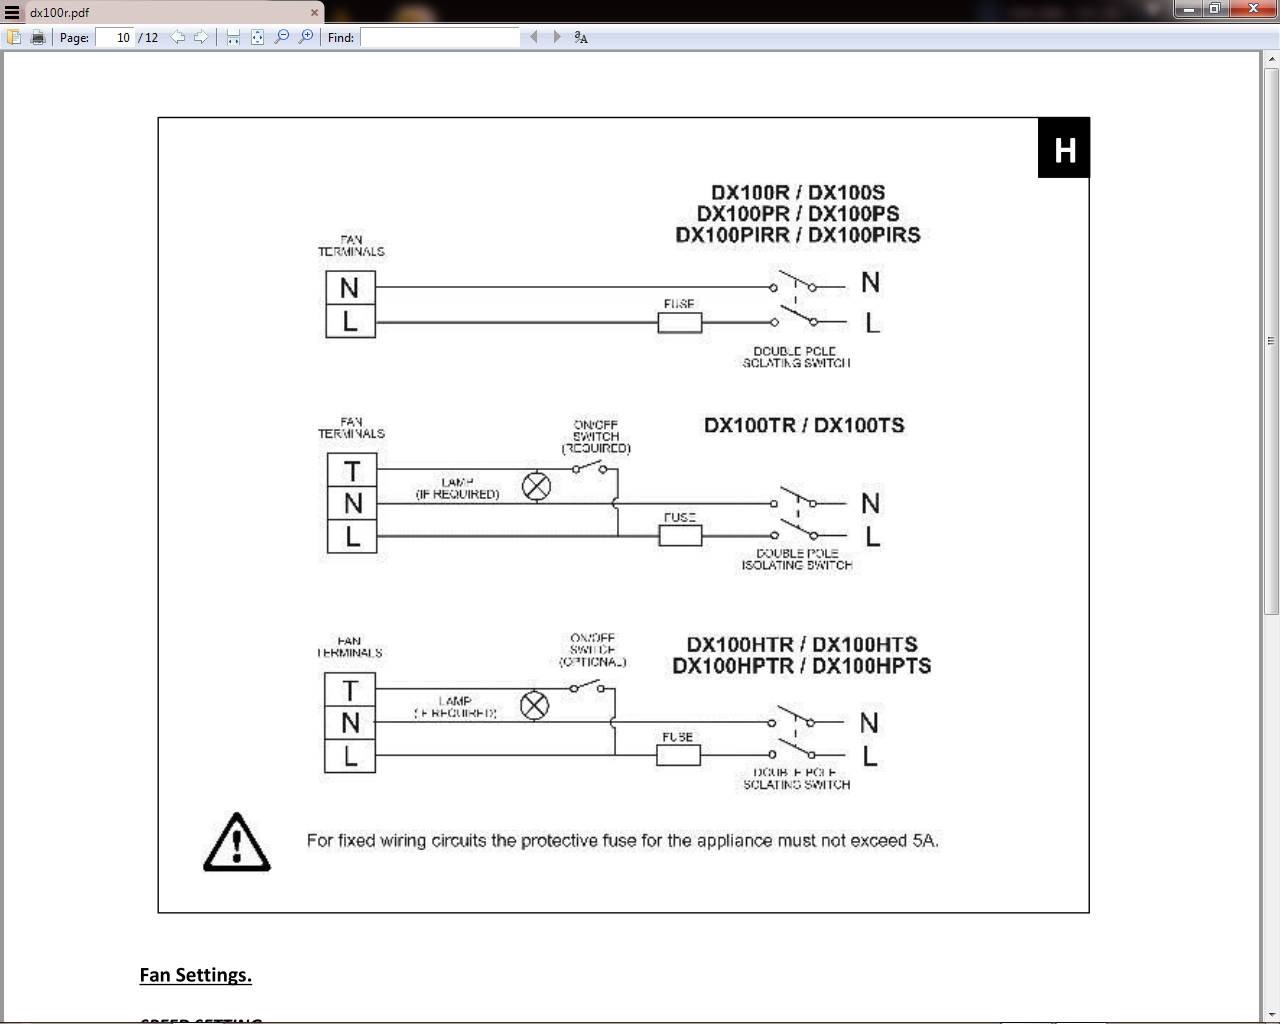 Extractor Fan Humidistat wiring question | DIYnot Forums bathroom wiring diagram 